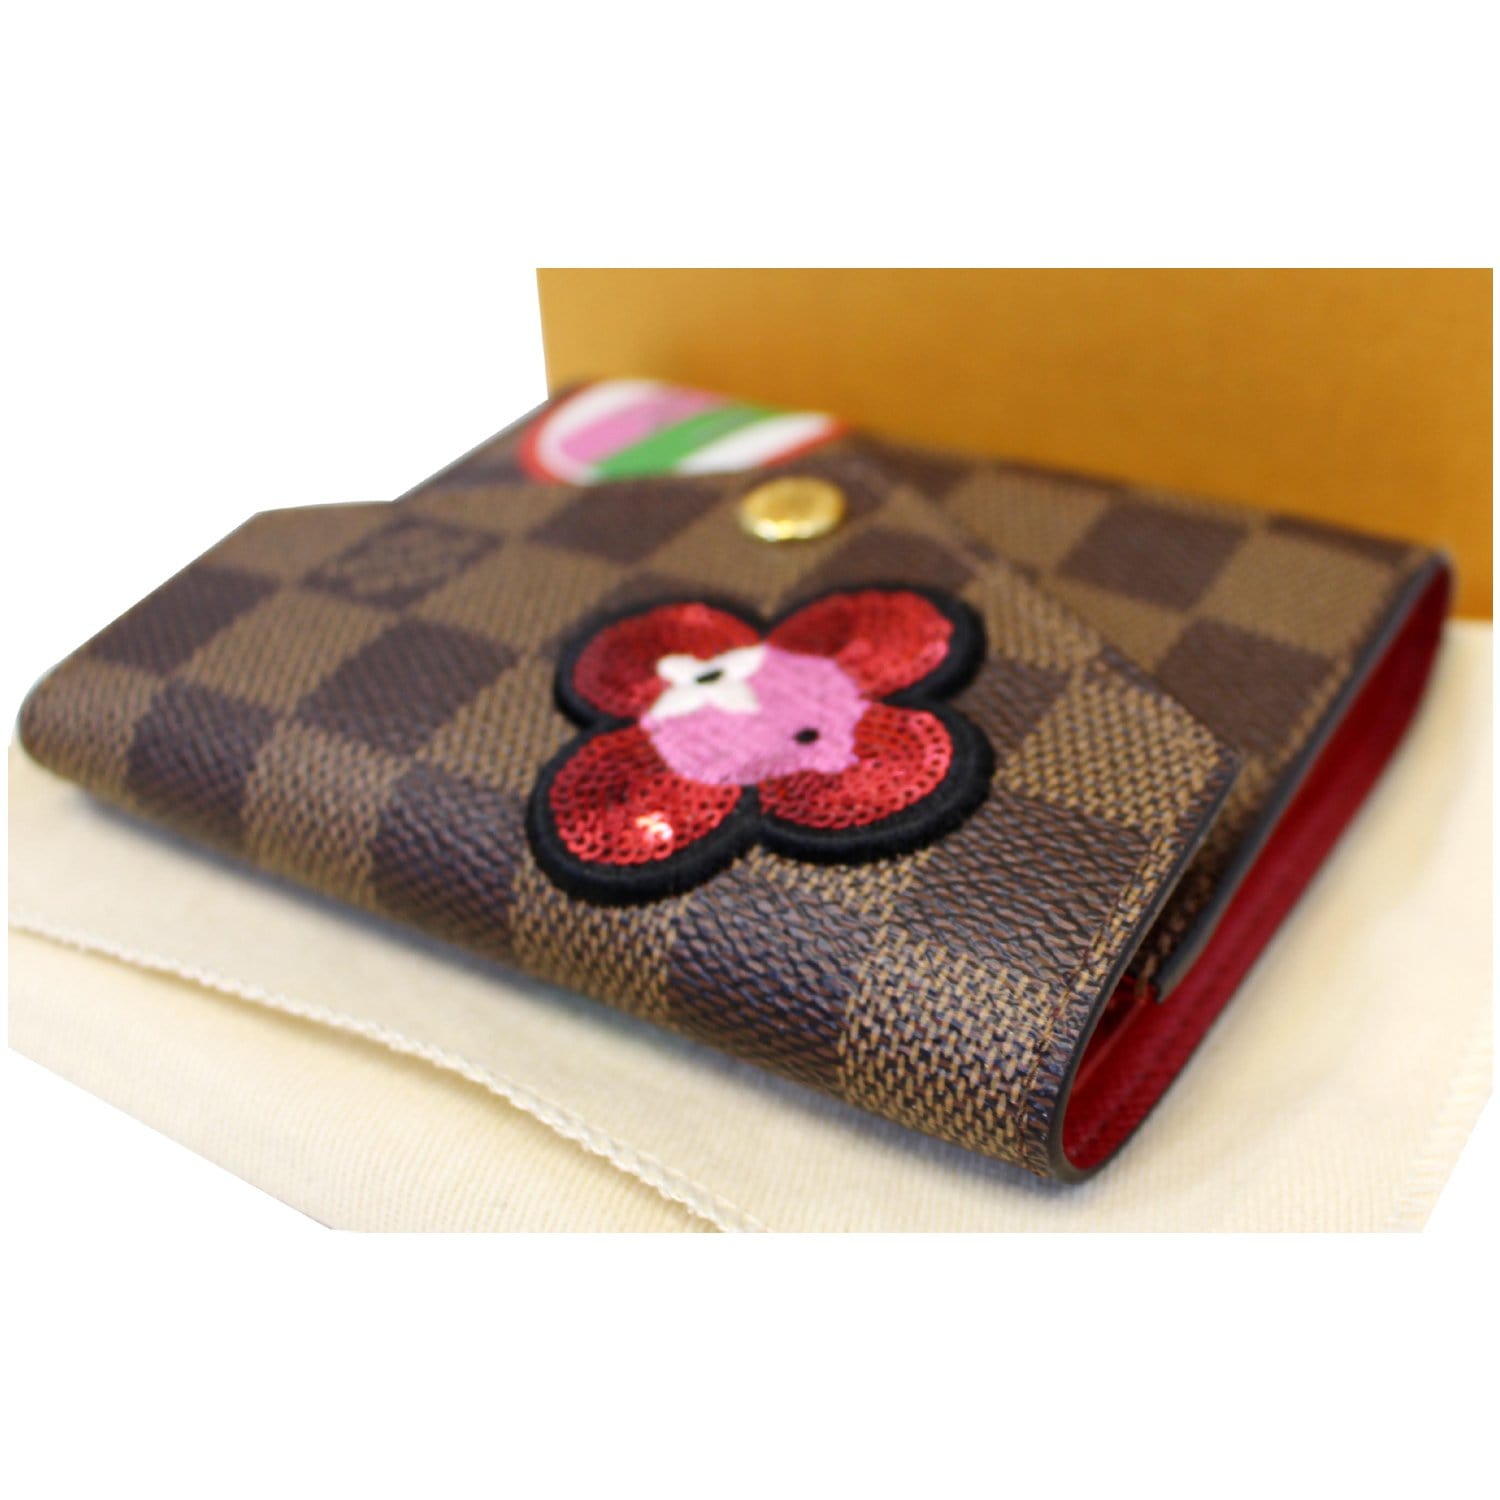 Victorine wallet Louis Vuitton Brown in Other - 33204076